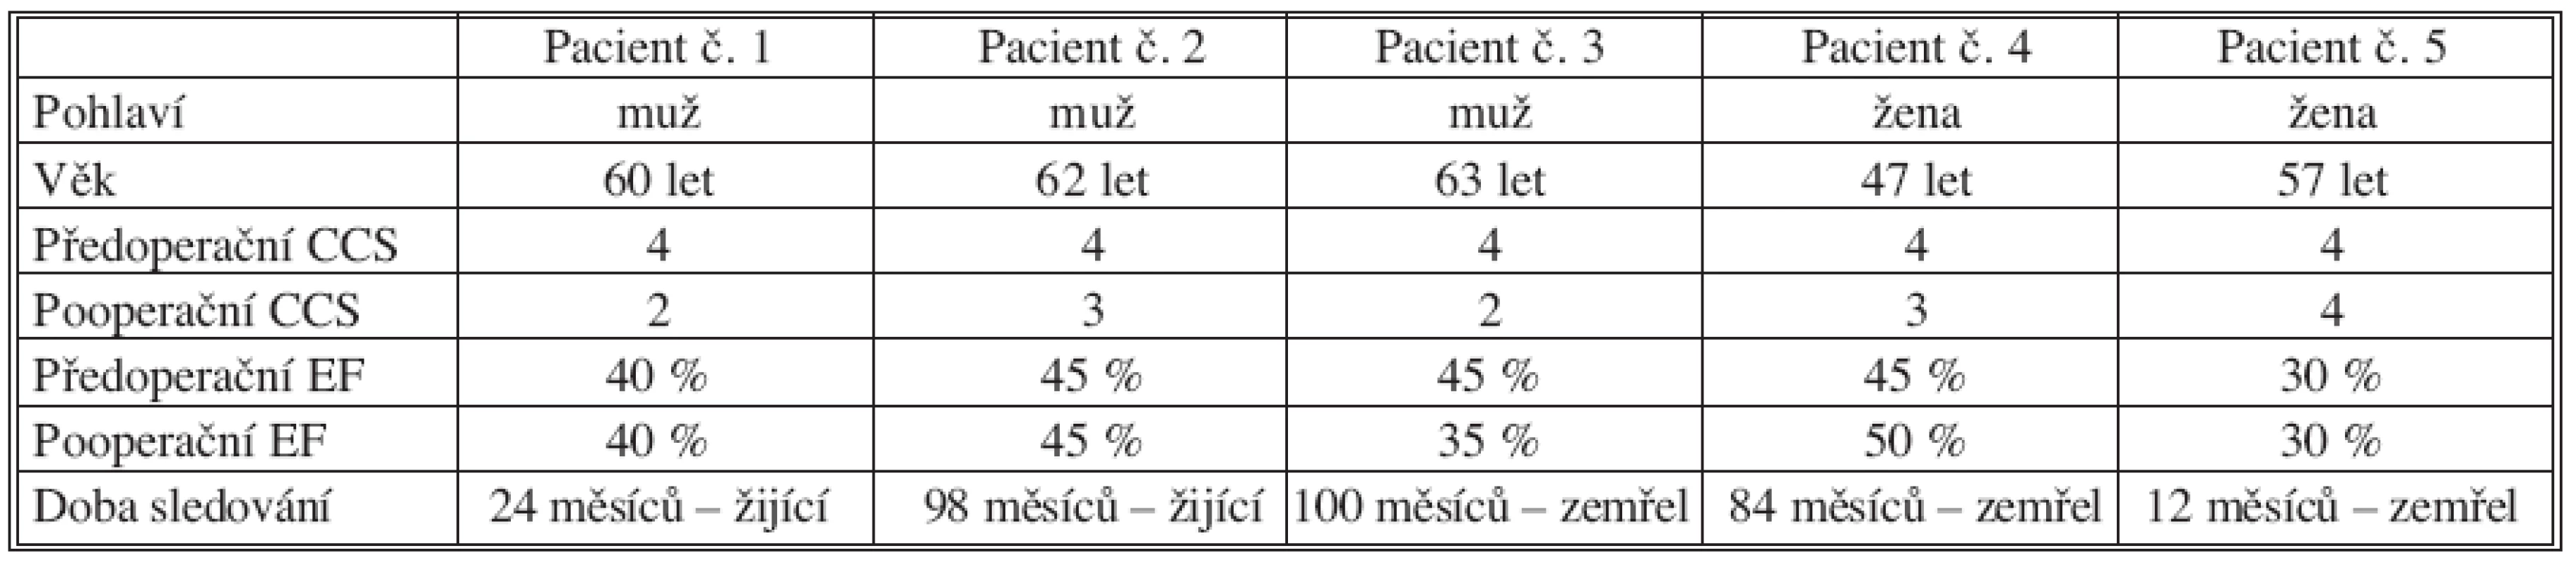 Souhrnná data u pacientů po izolované TMLR
Tab. 3. Pooled data in patients following isolated TMLR